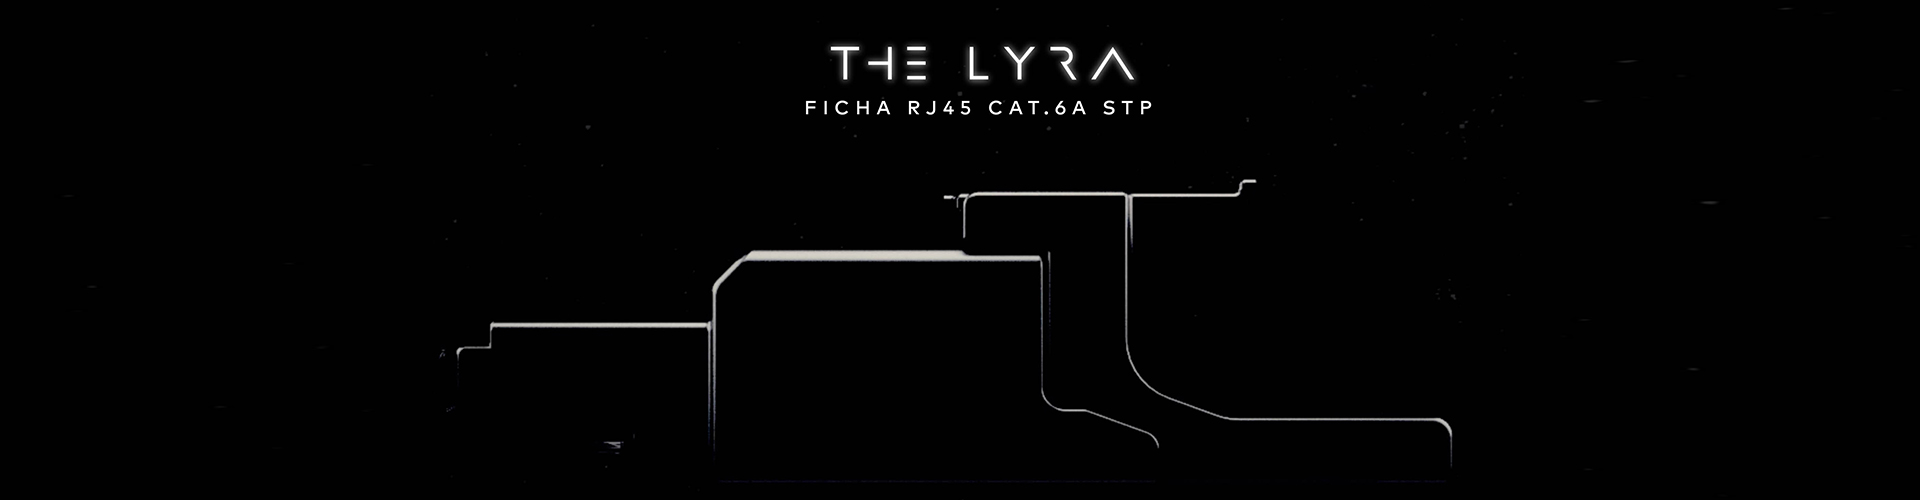 the Lyra